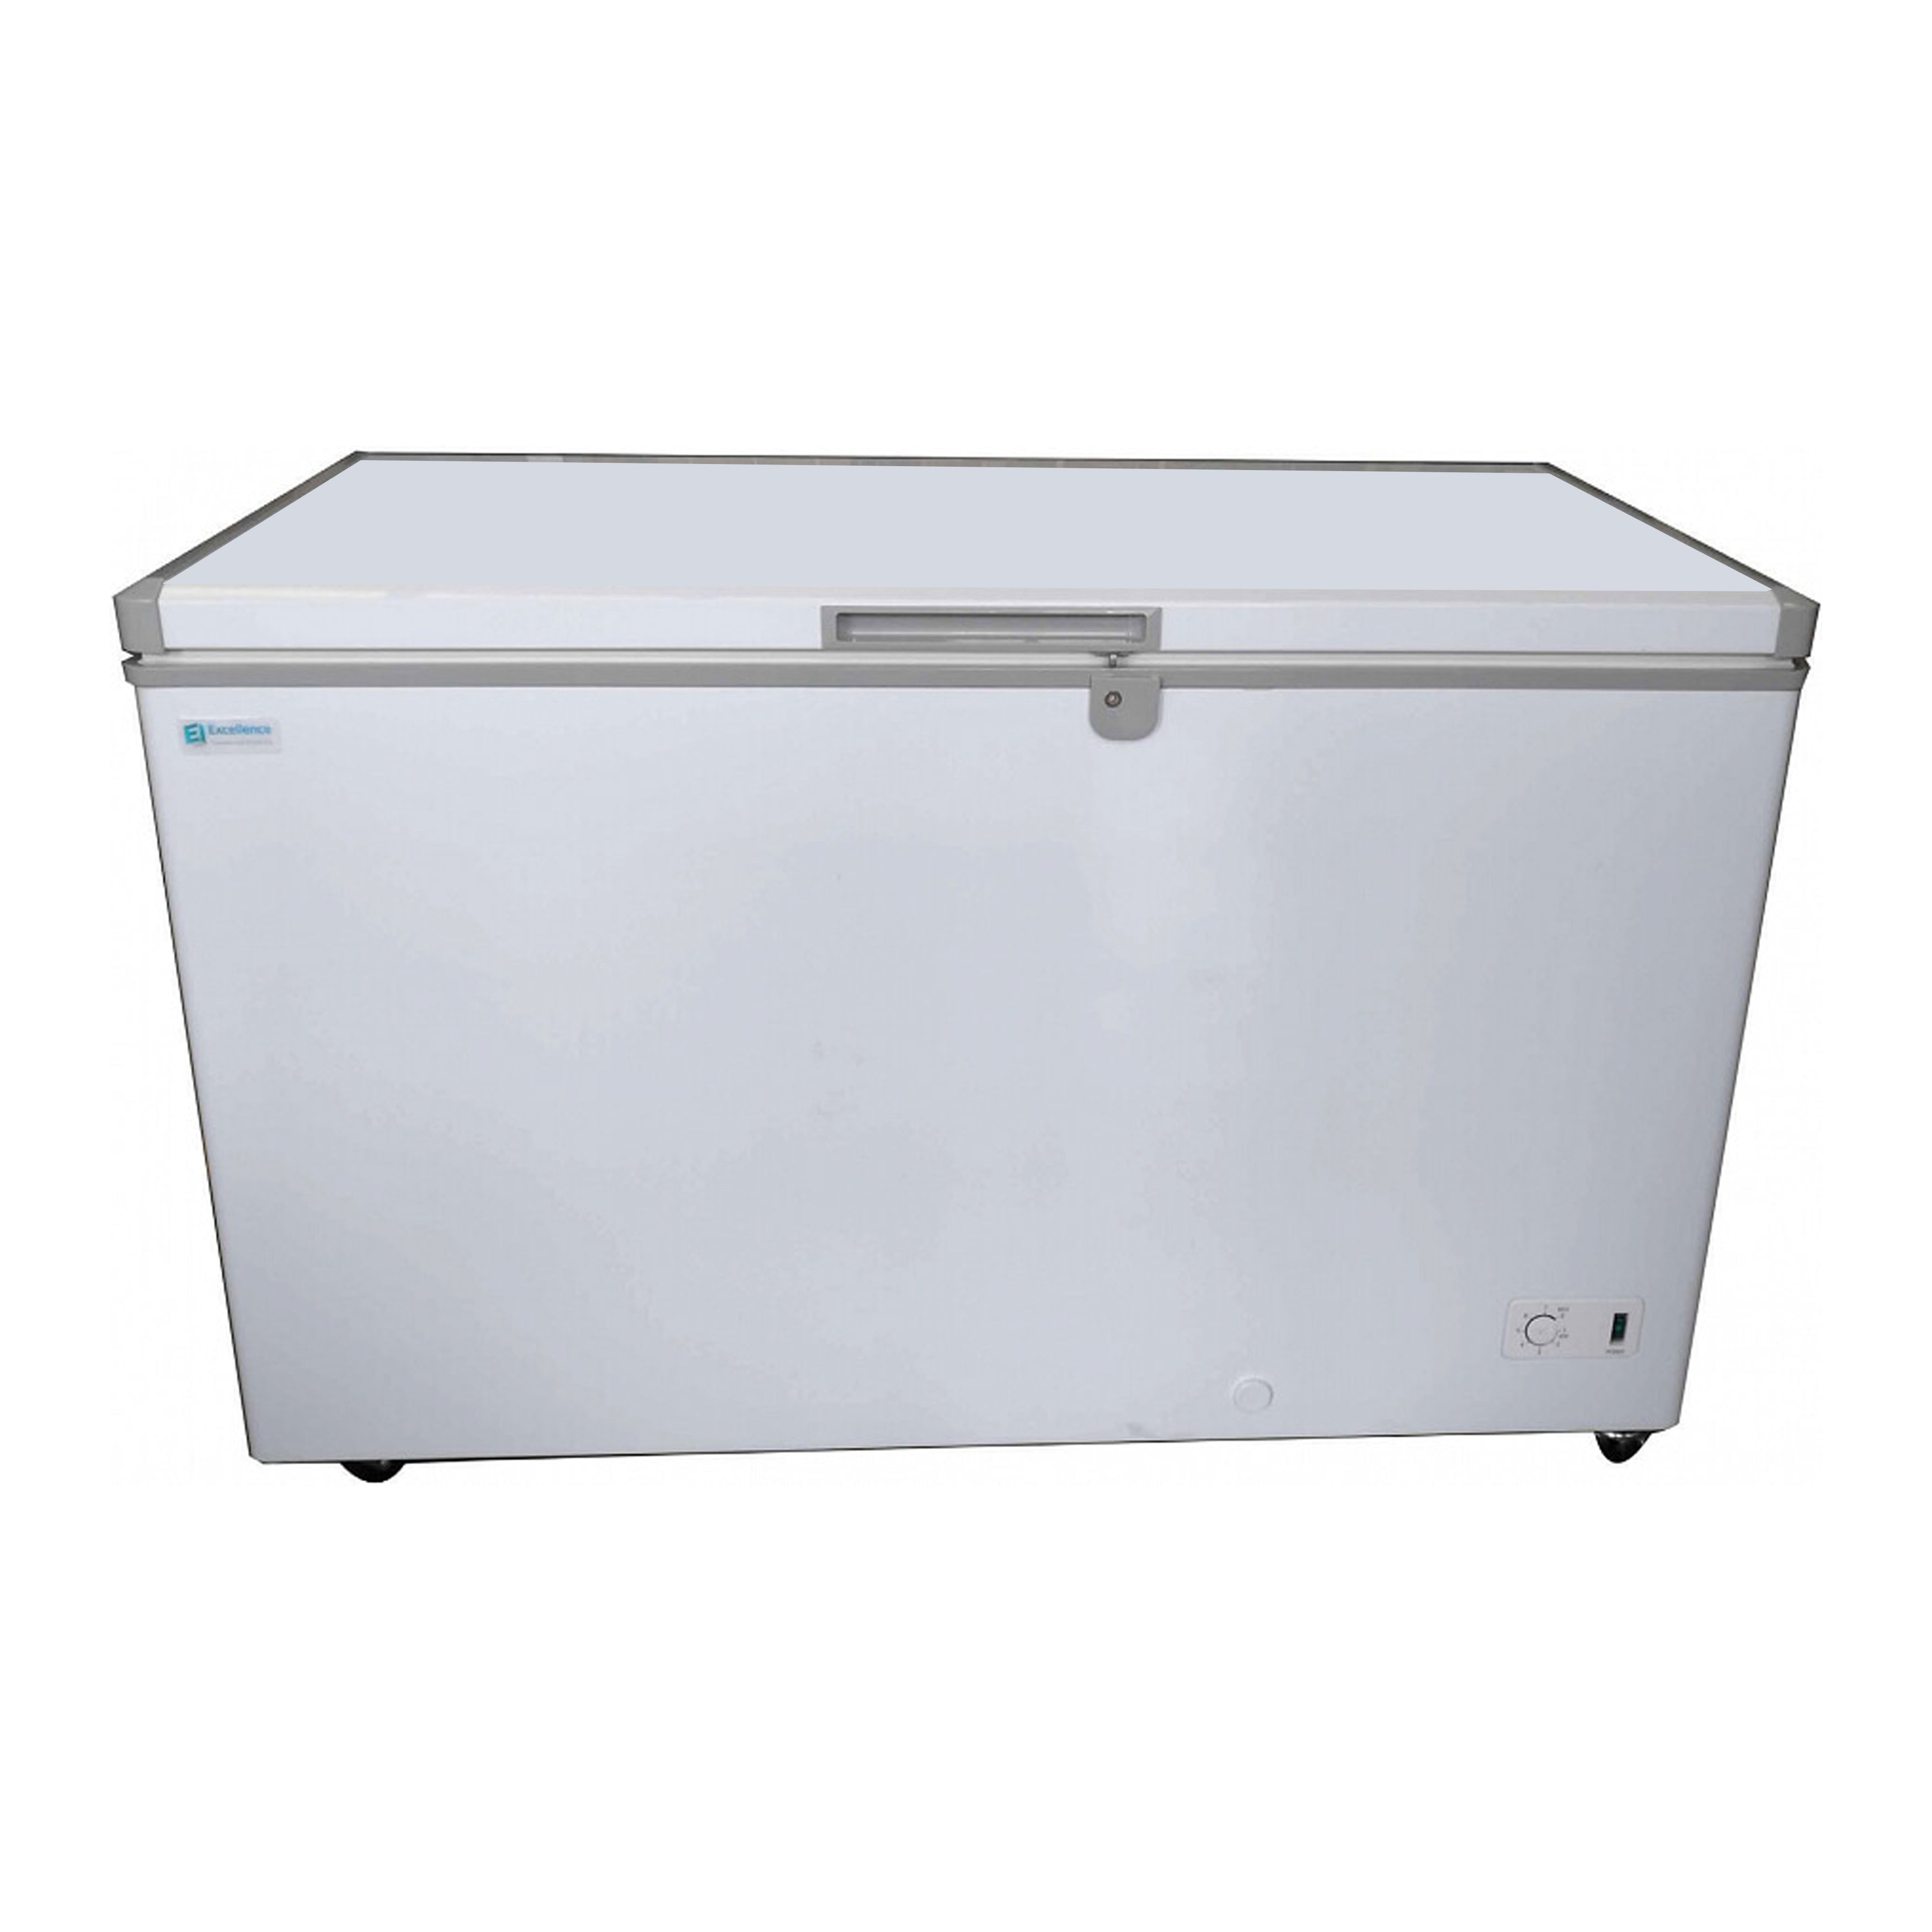 Excellence Industries - BD-13, 51" Commercial Chest Freezer 1 Solid Door 13.2 cu. ft.